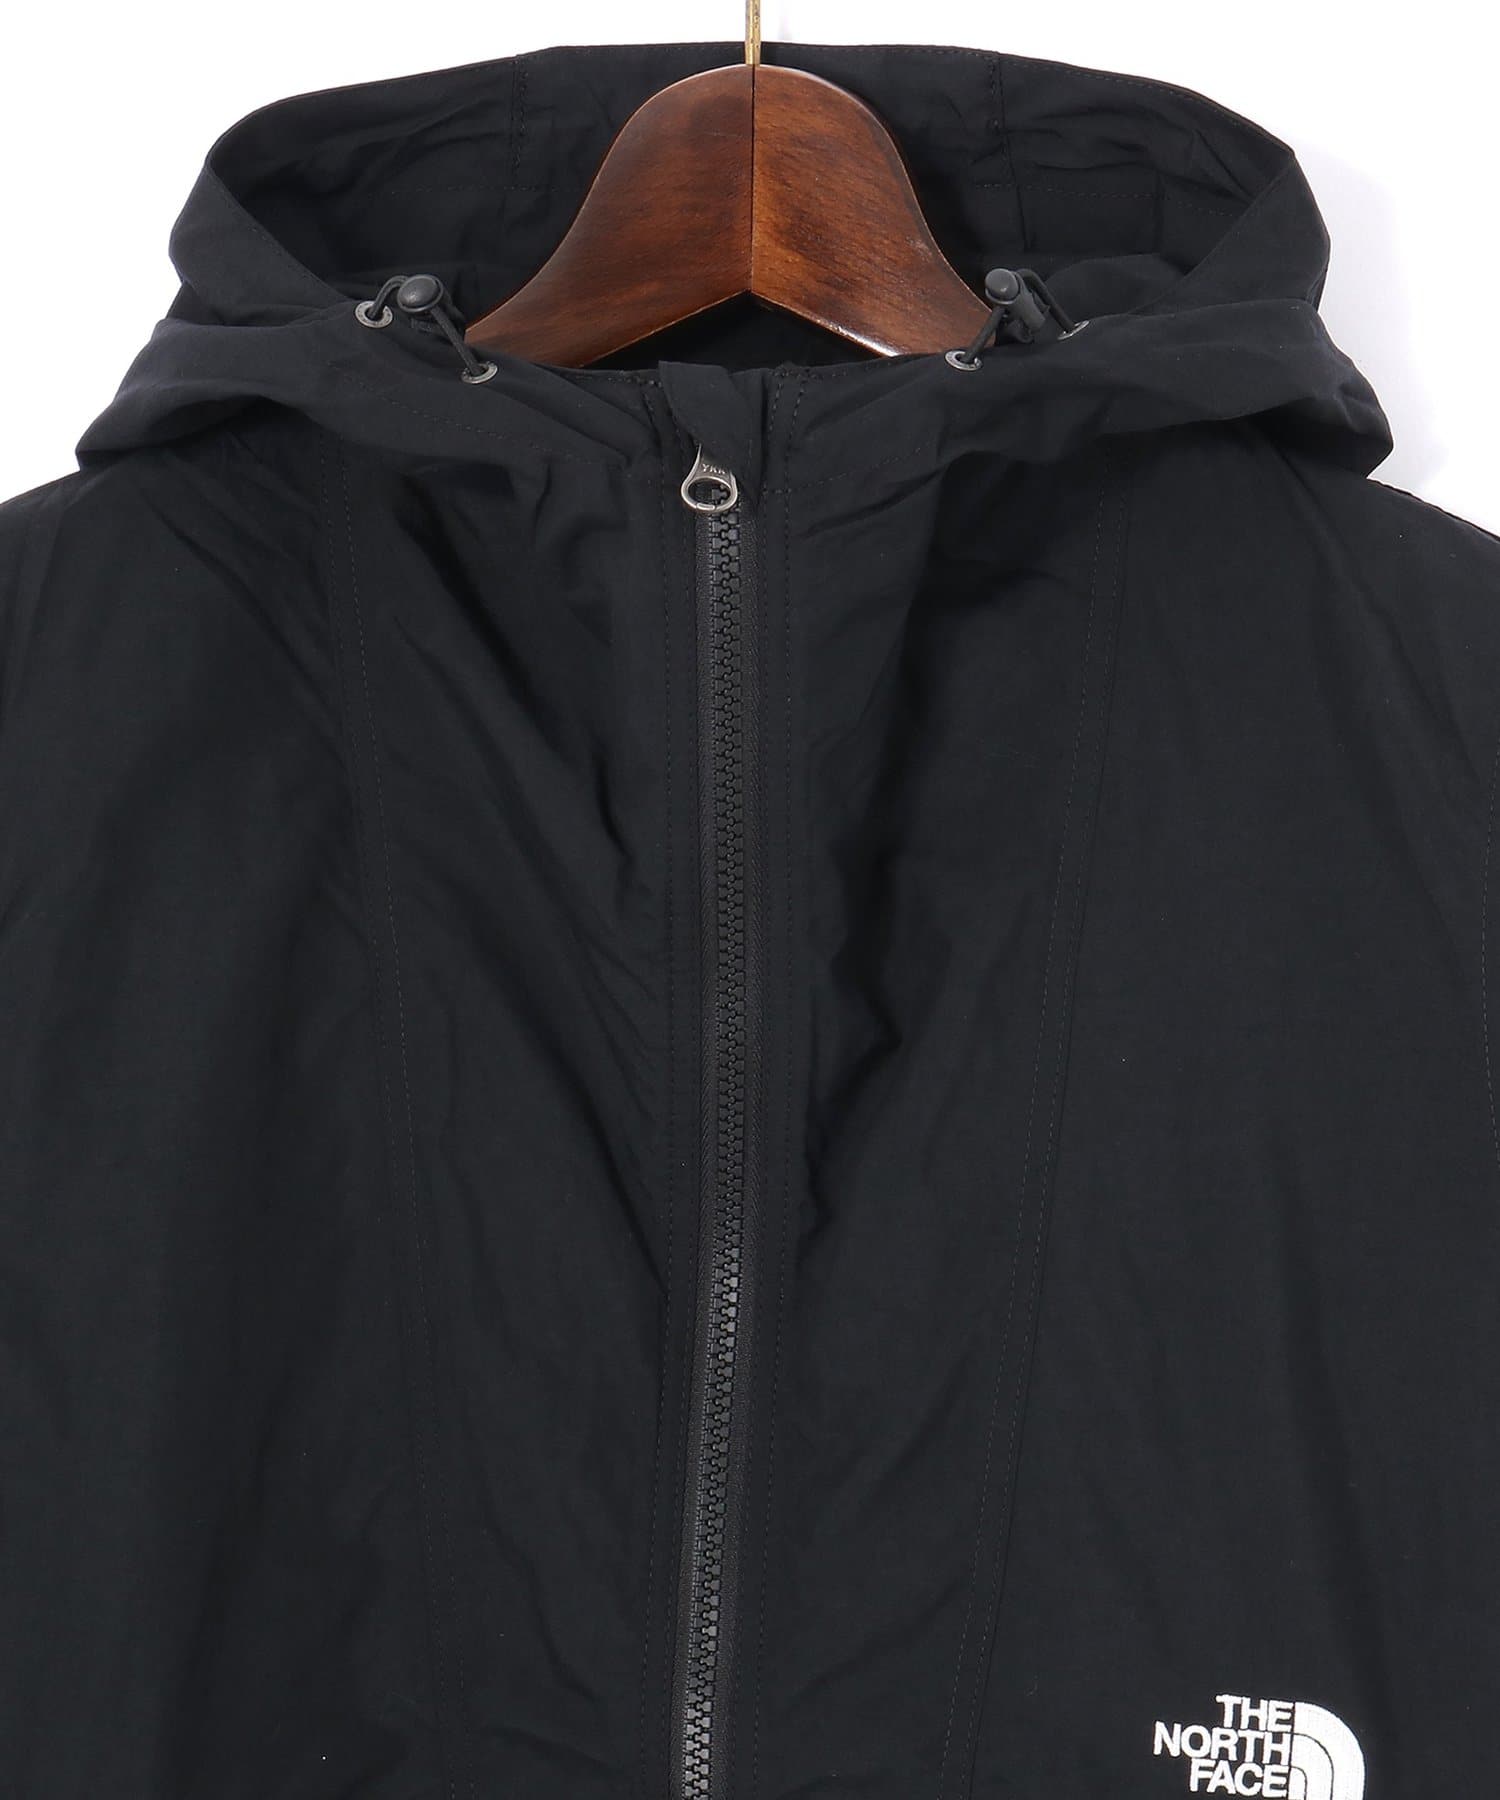 The North Face ノースフェイス Compact Jacket Ciaopanic Typy チャオパニックティピー レディース Pal Closet パルクローゼット パルグループ公式ファッション通販サイト